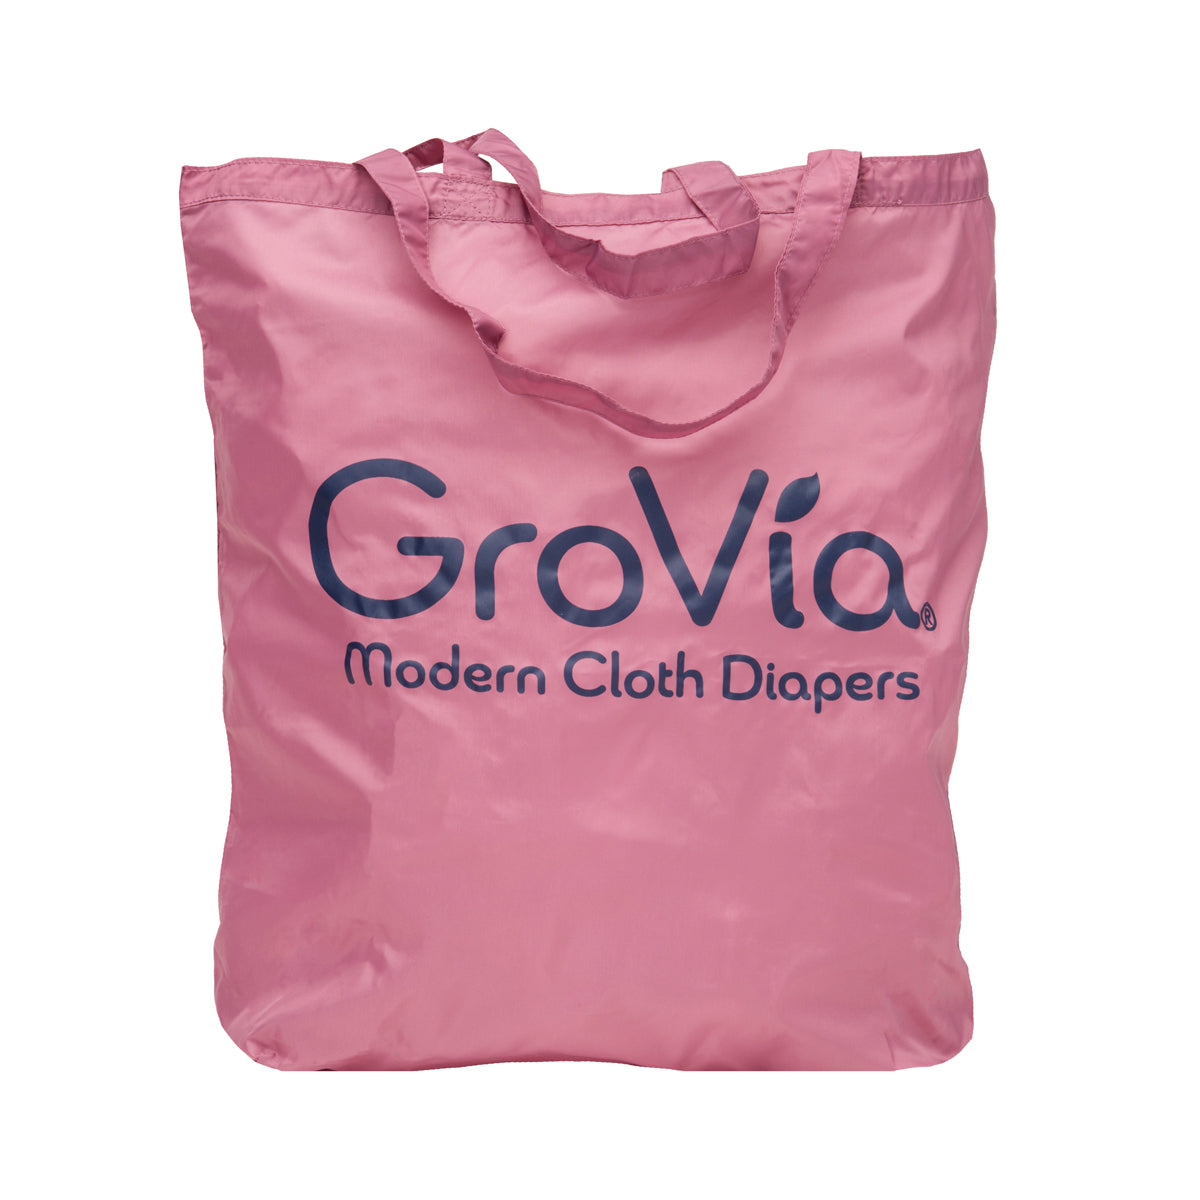 GroVia Brand